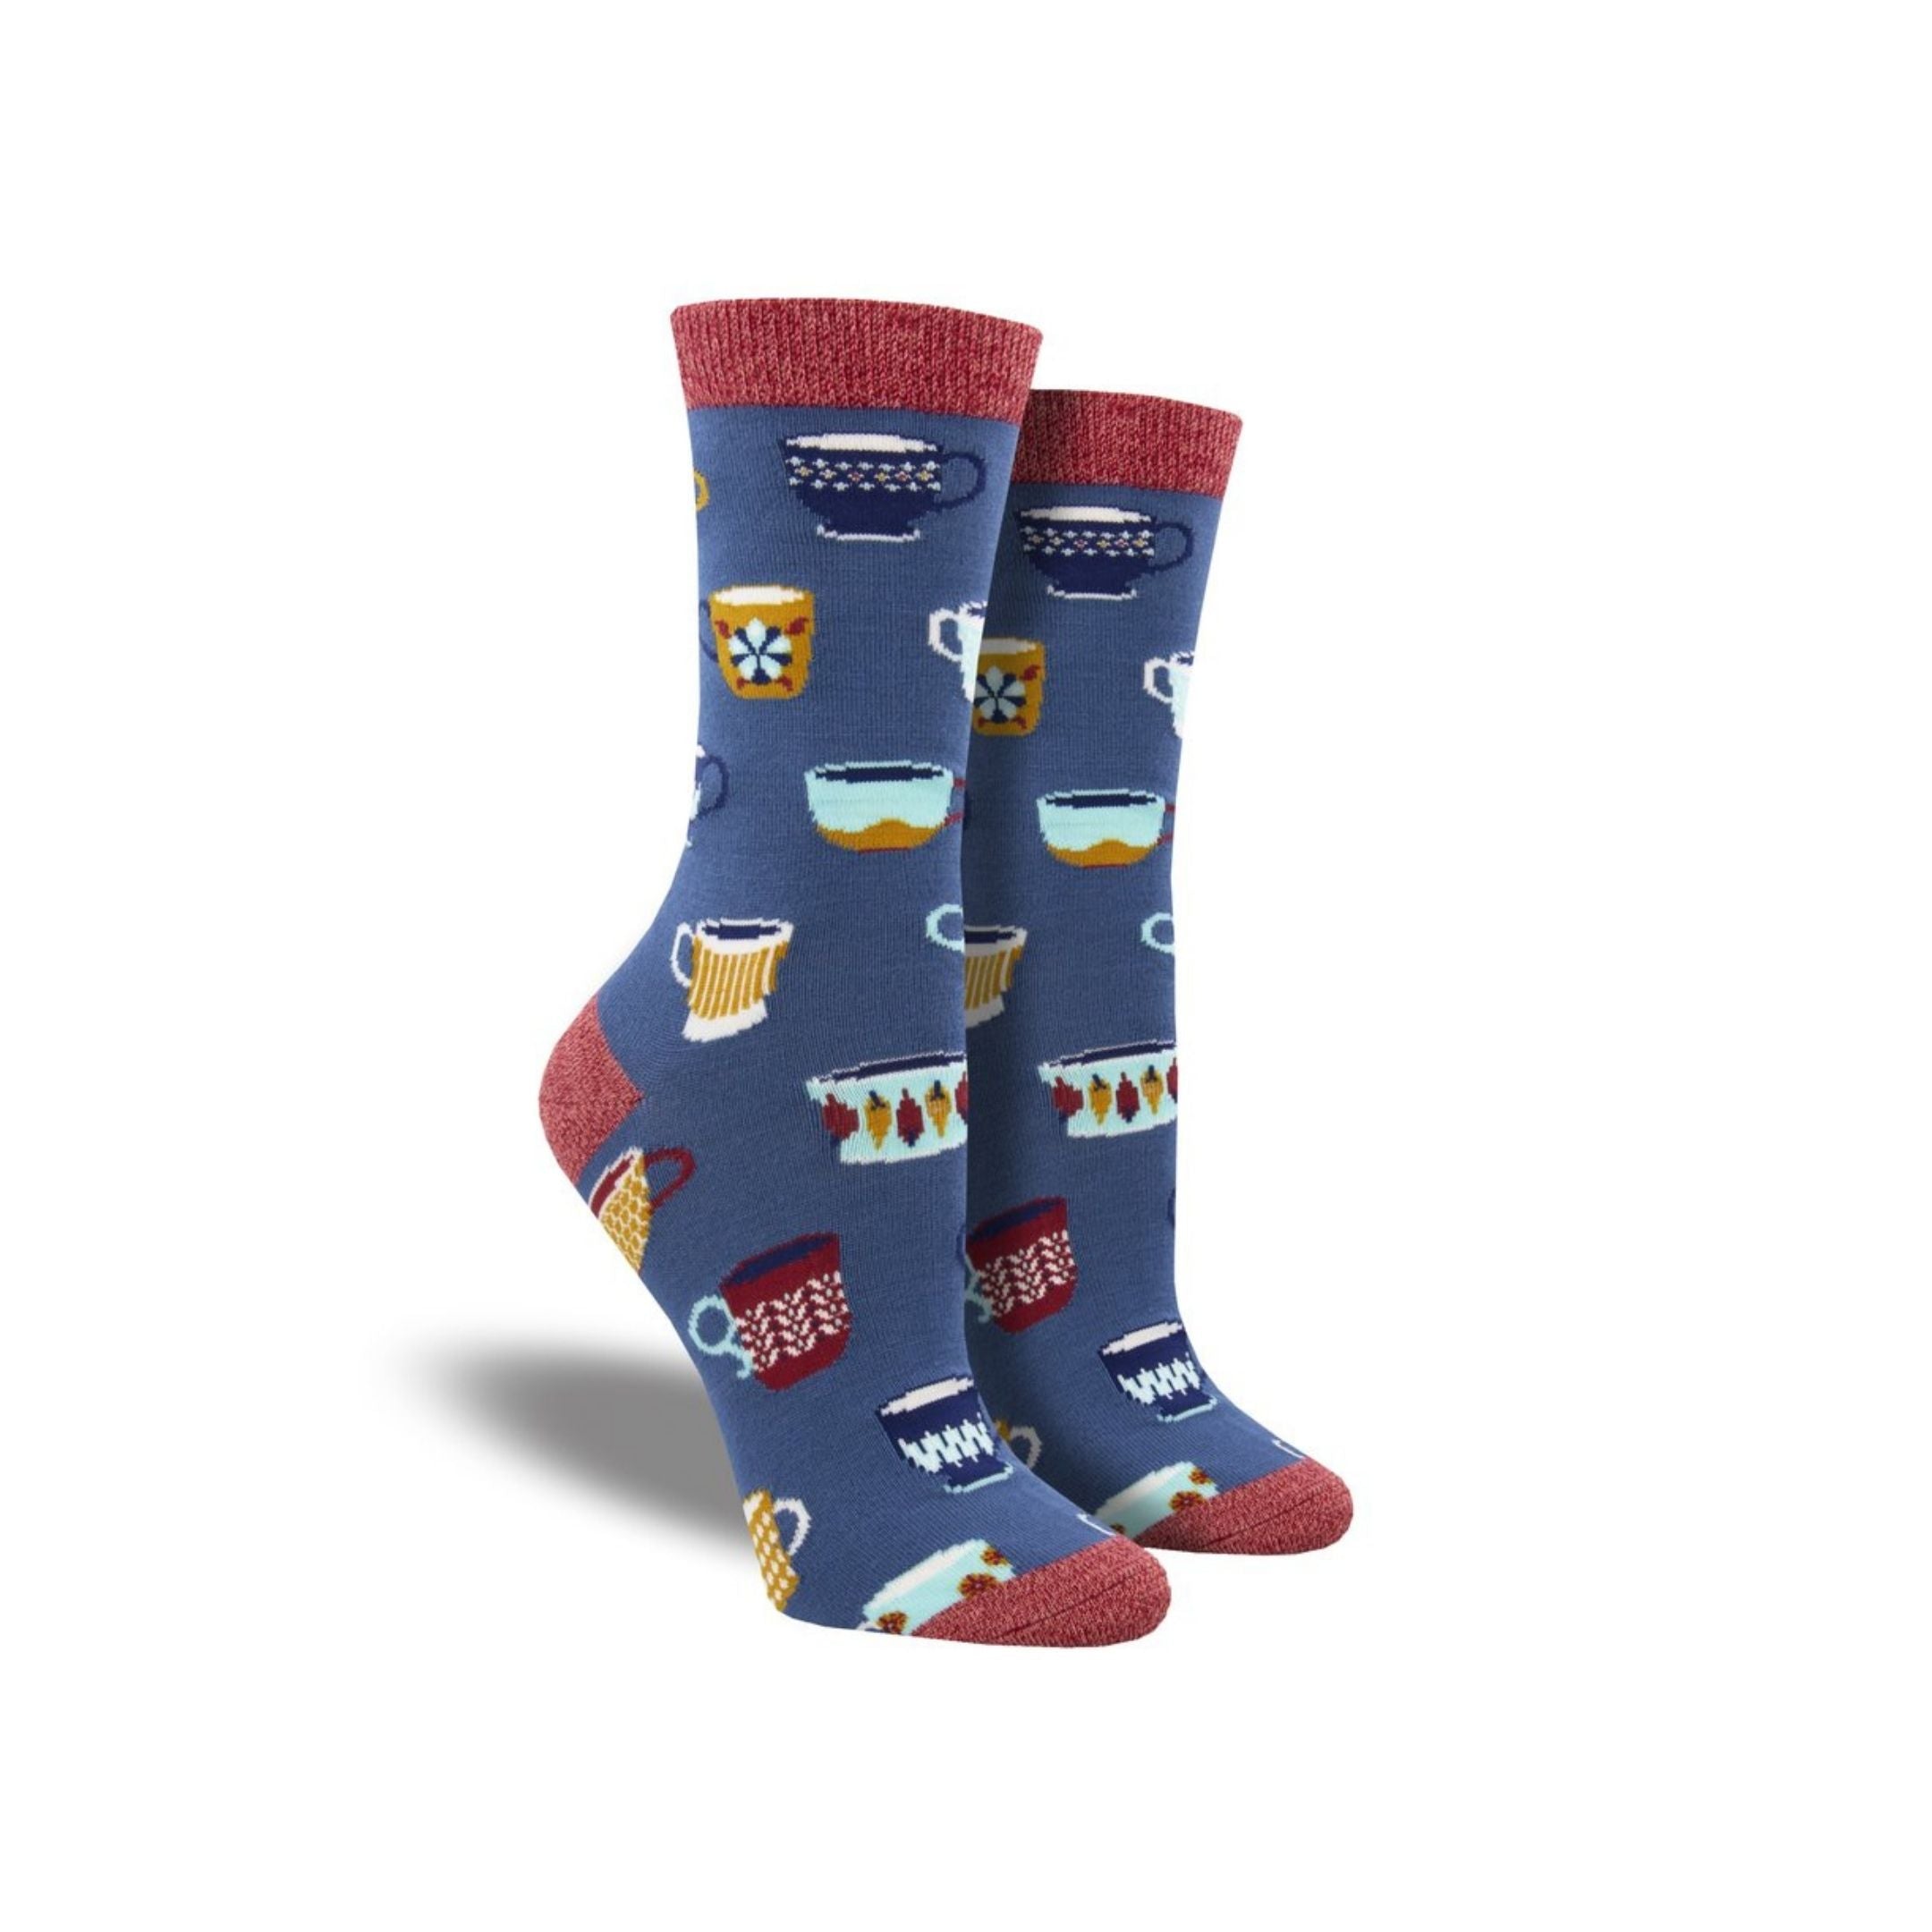 Buy Men's Novelty Socks By Socksmith